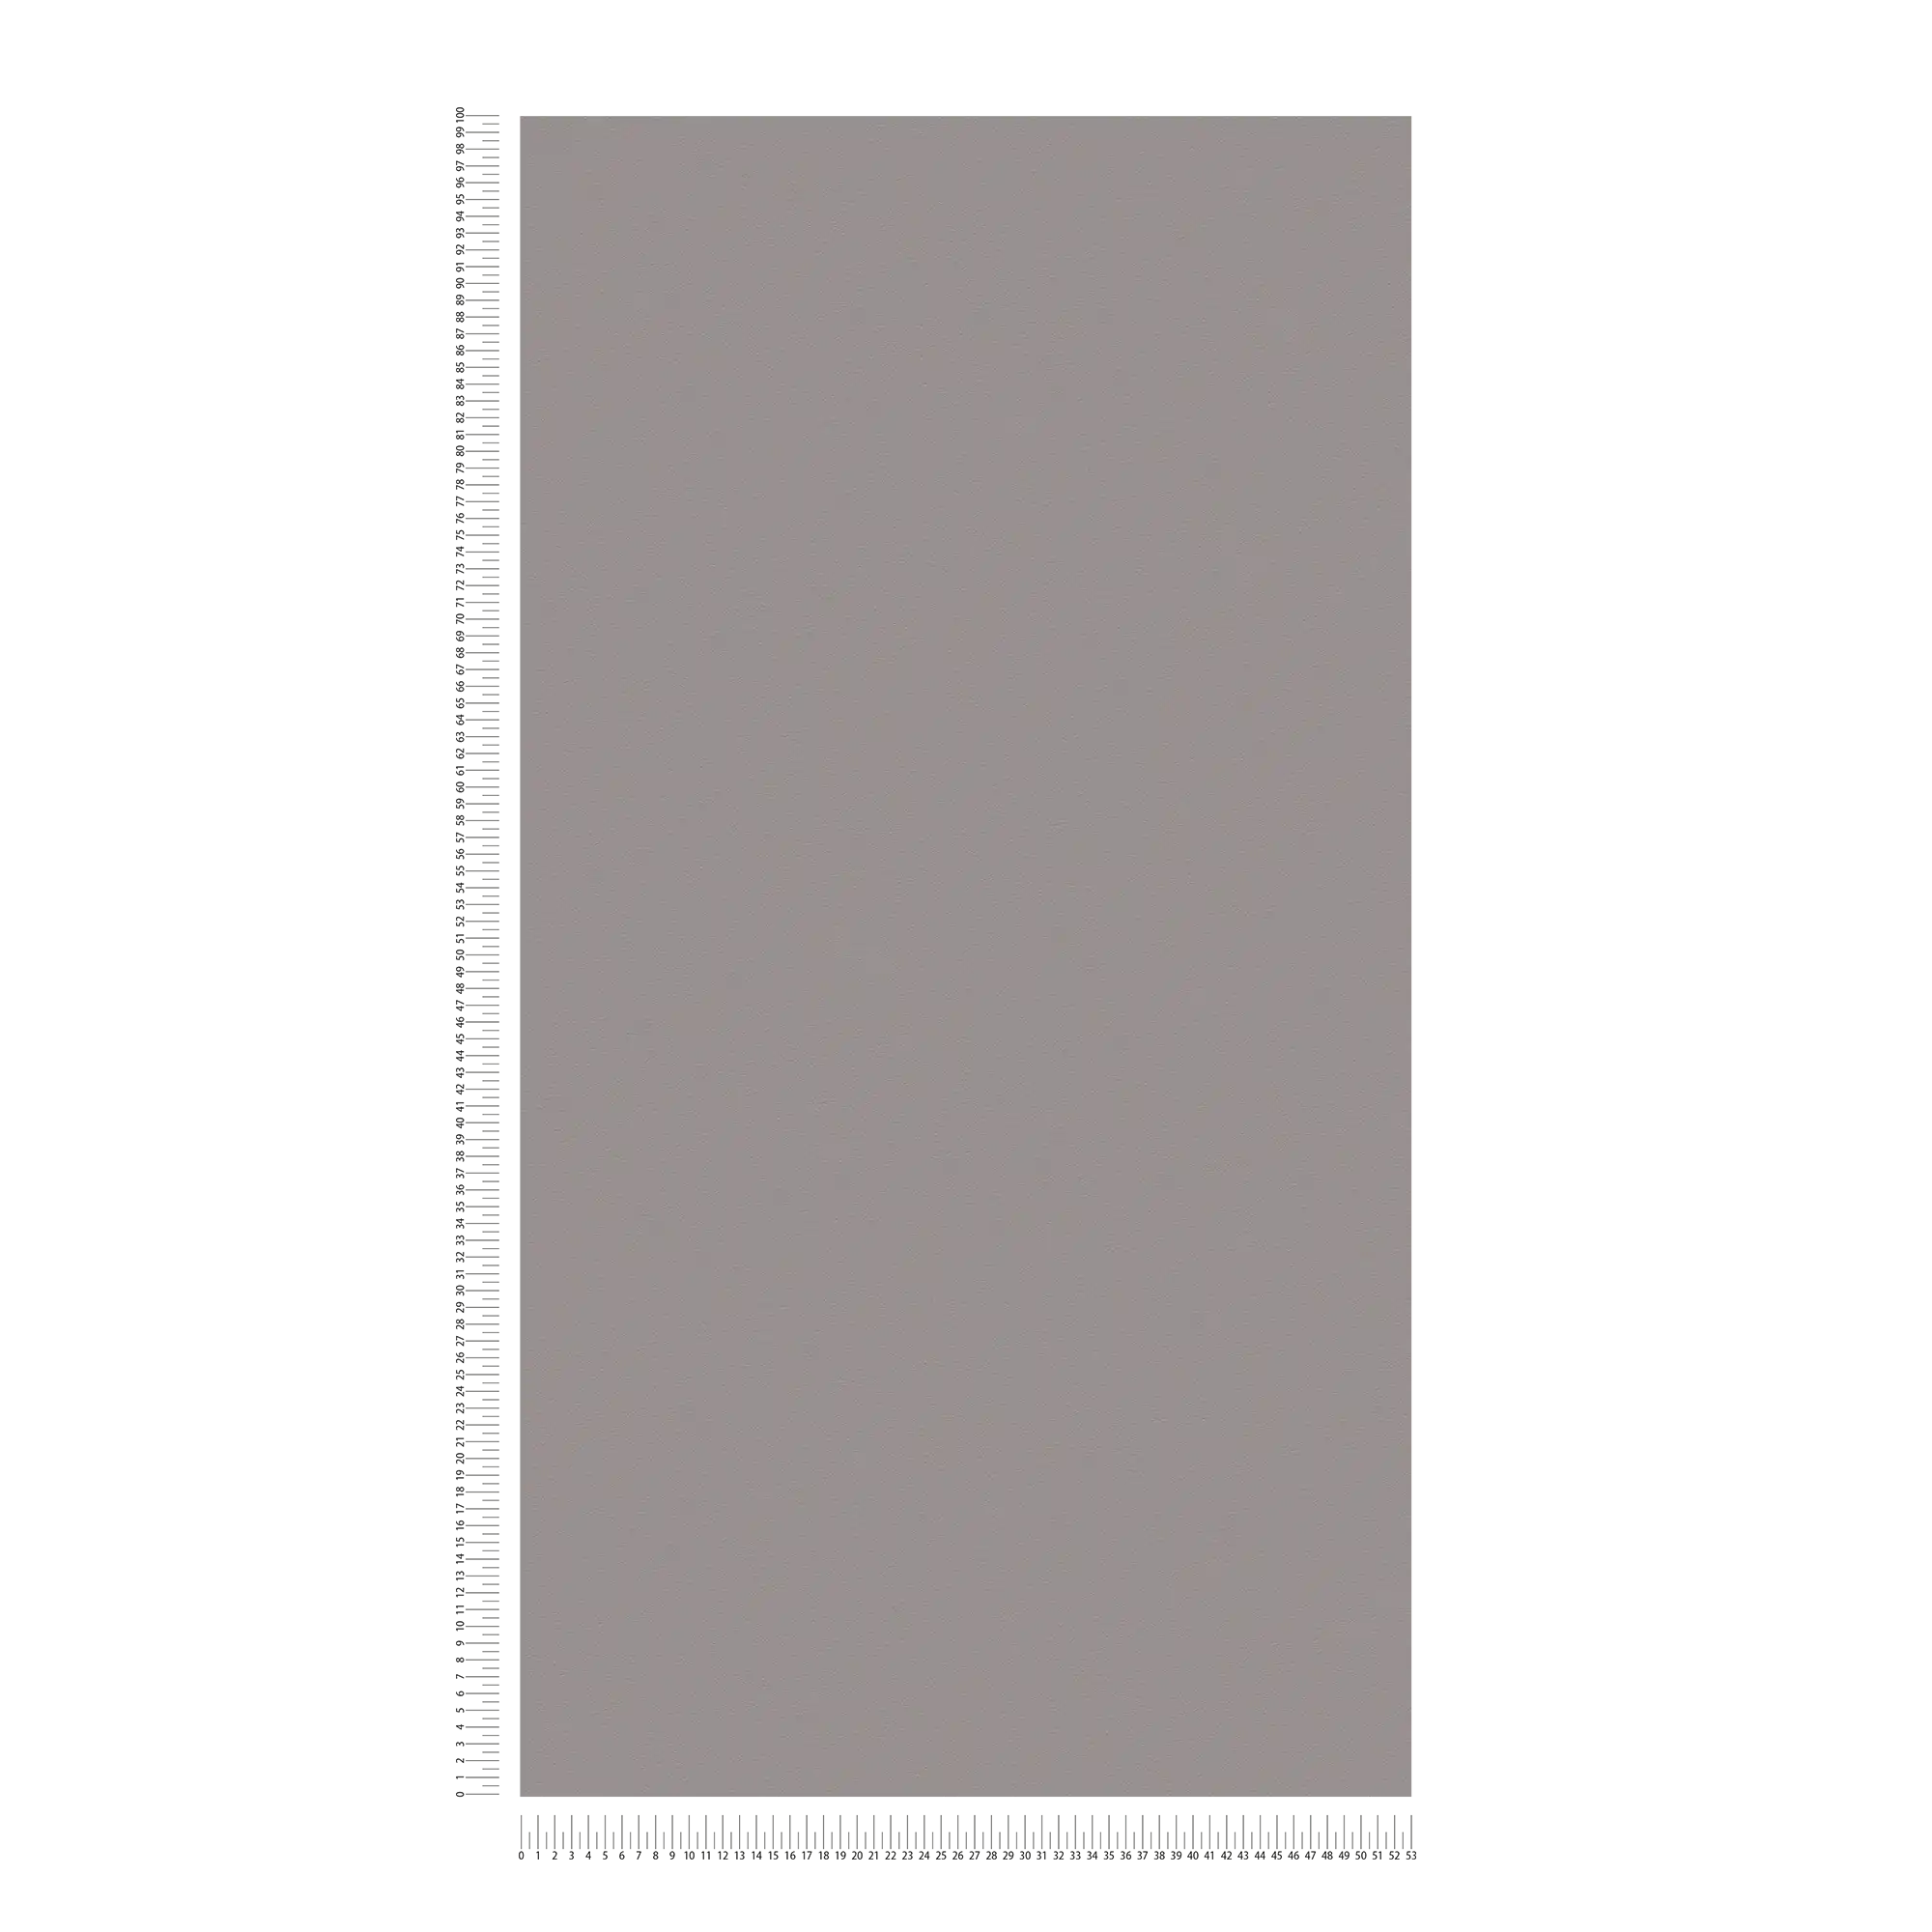             Papel pintado no tejido gris oscuro con superficie lisa - gris
        